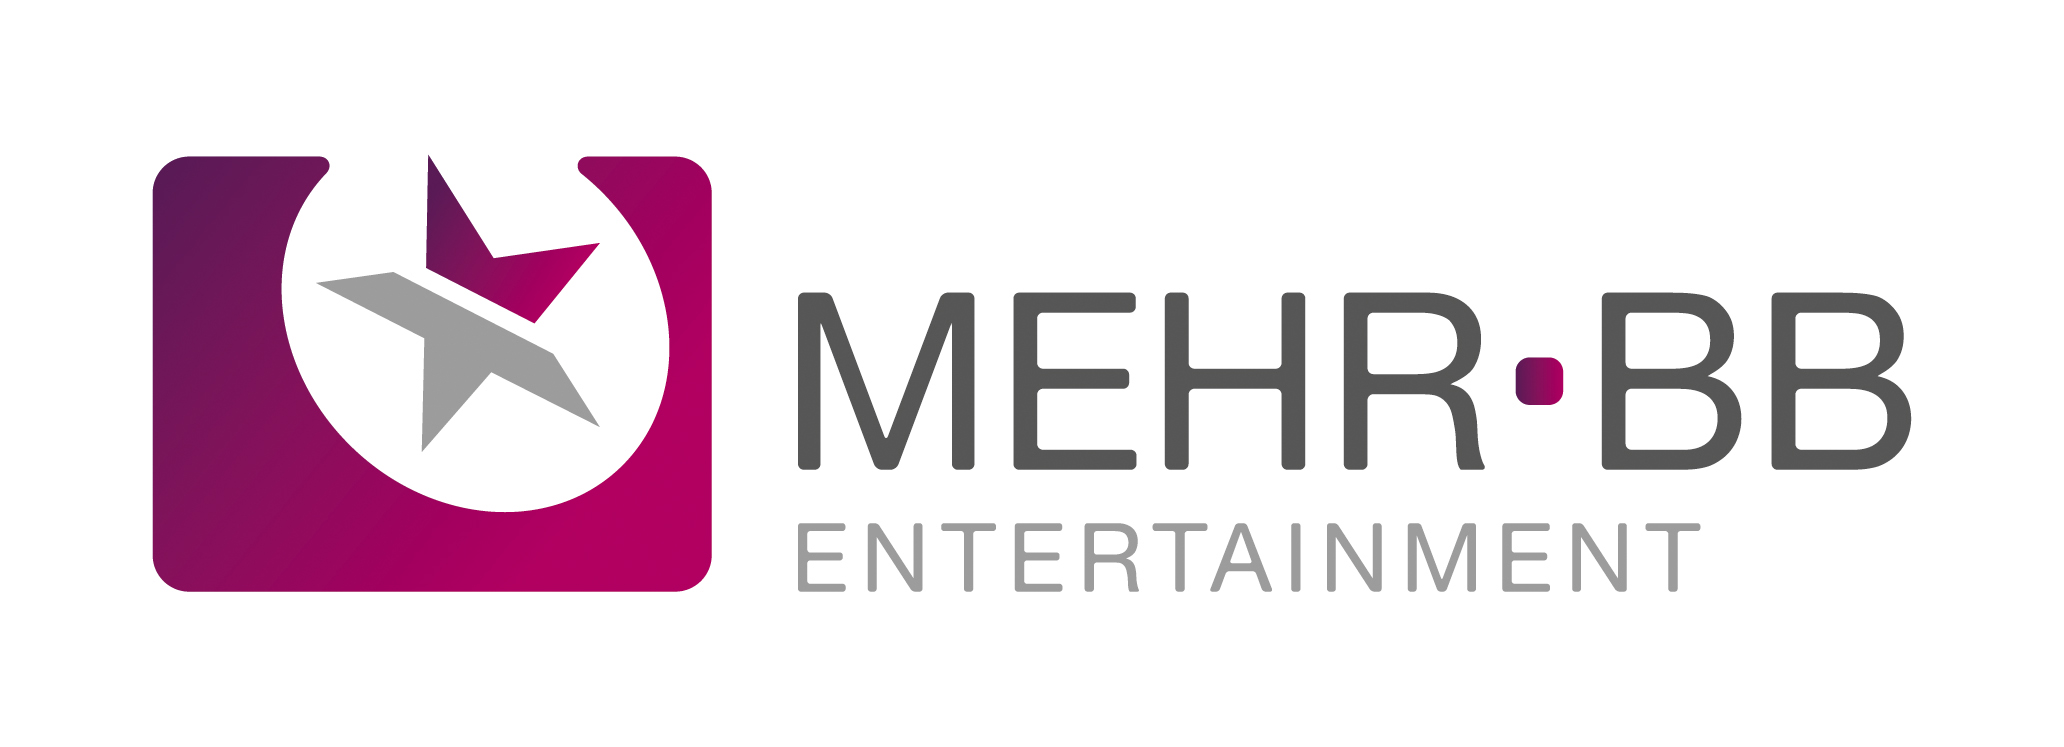 Mehr BB Entertainment © Mehr BB Entertainment